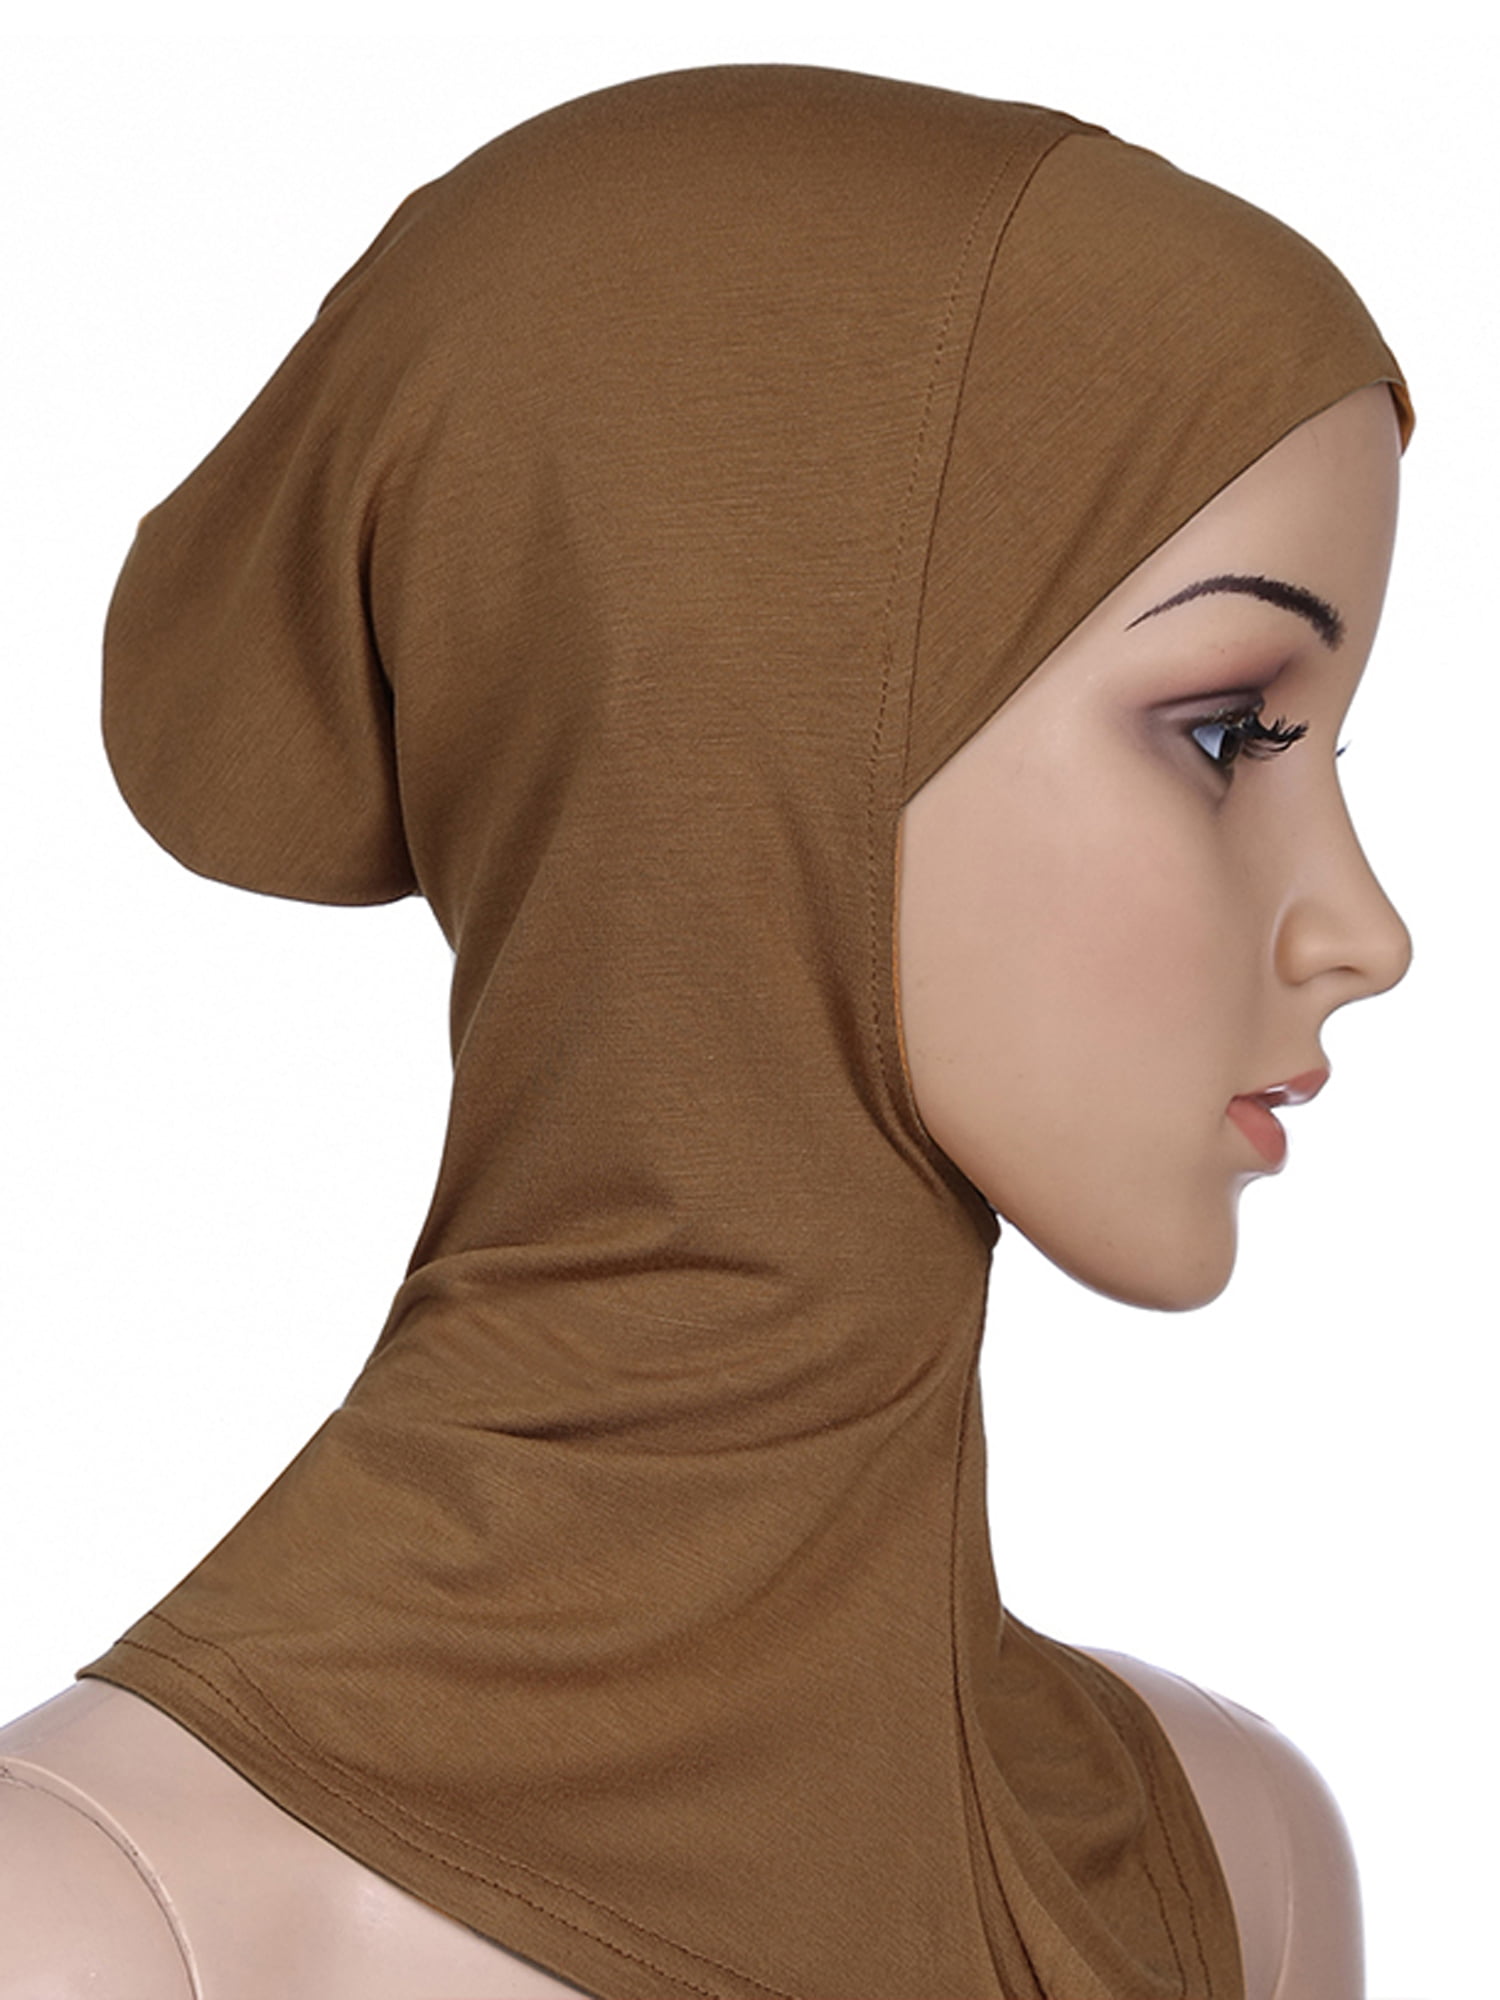 Women's Under Scarf Hat Cap Bone Bonnet Ninja Hijab Islamic Neck Cover Muslim 